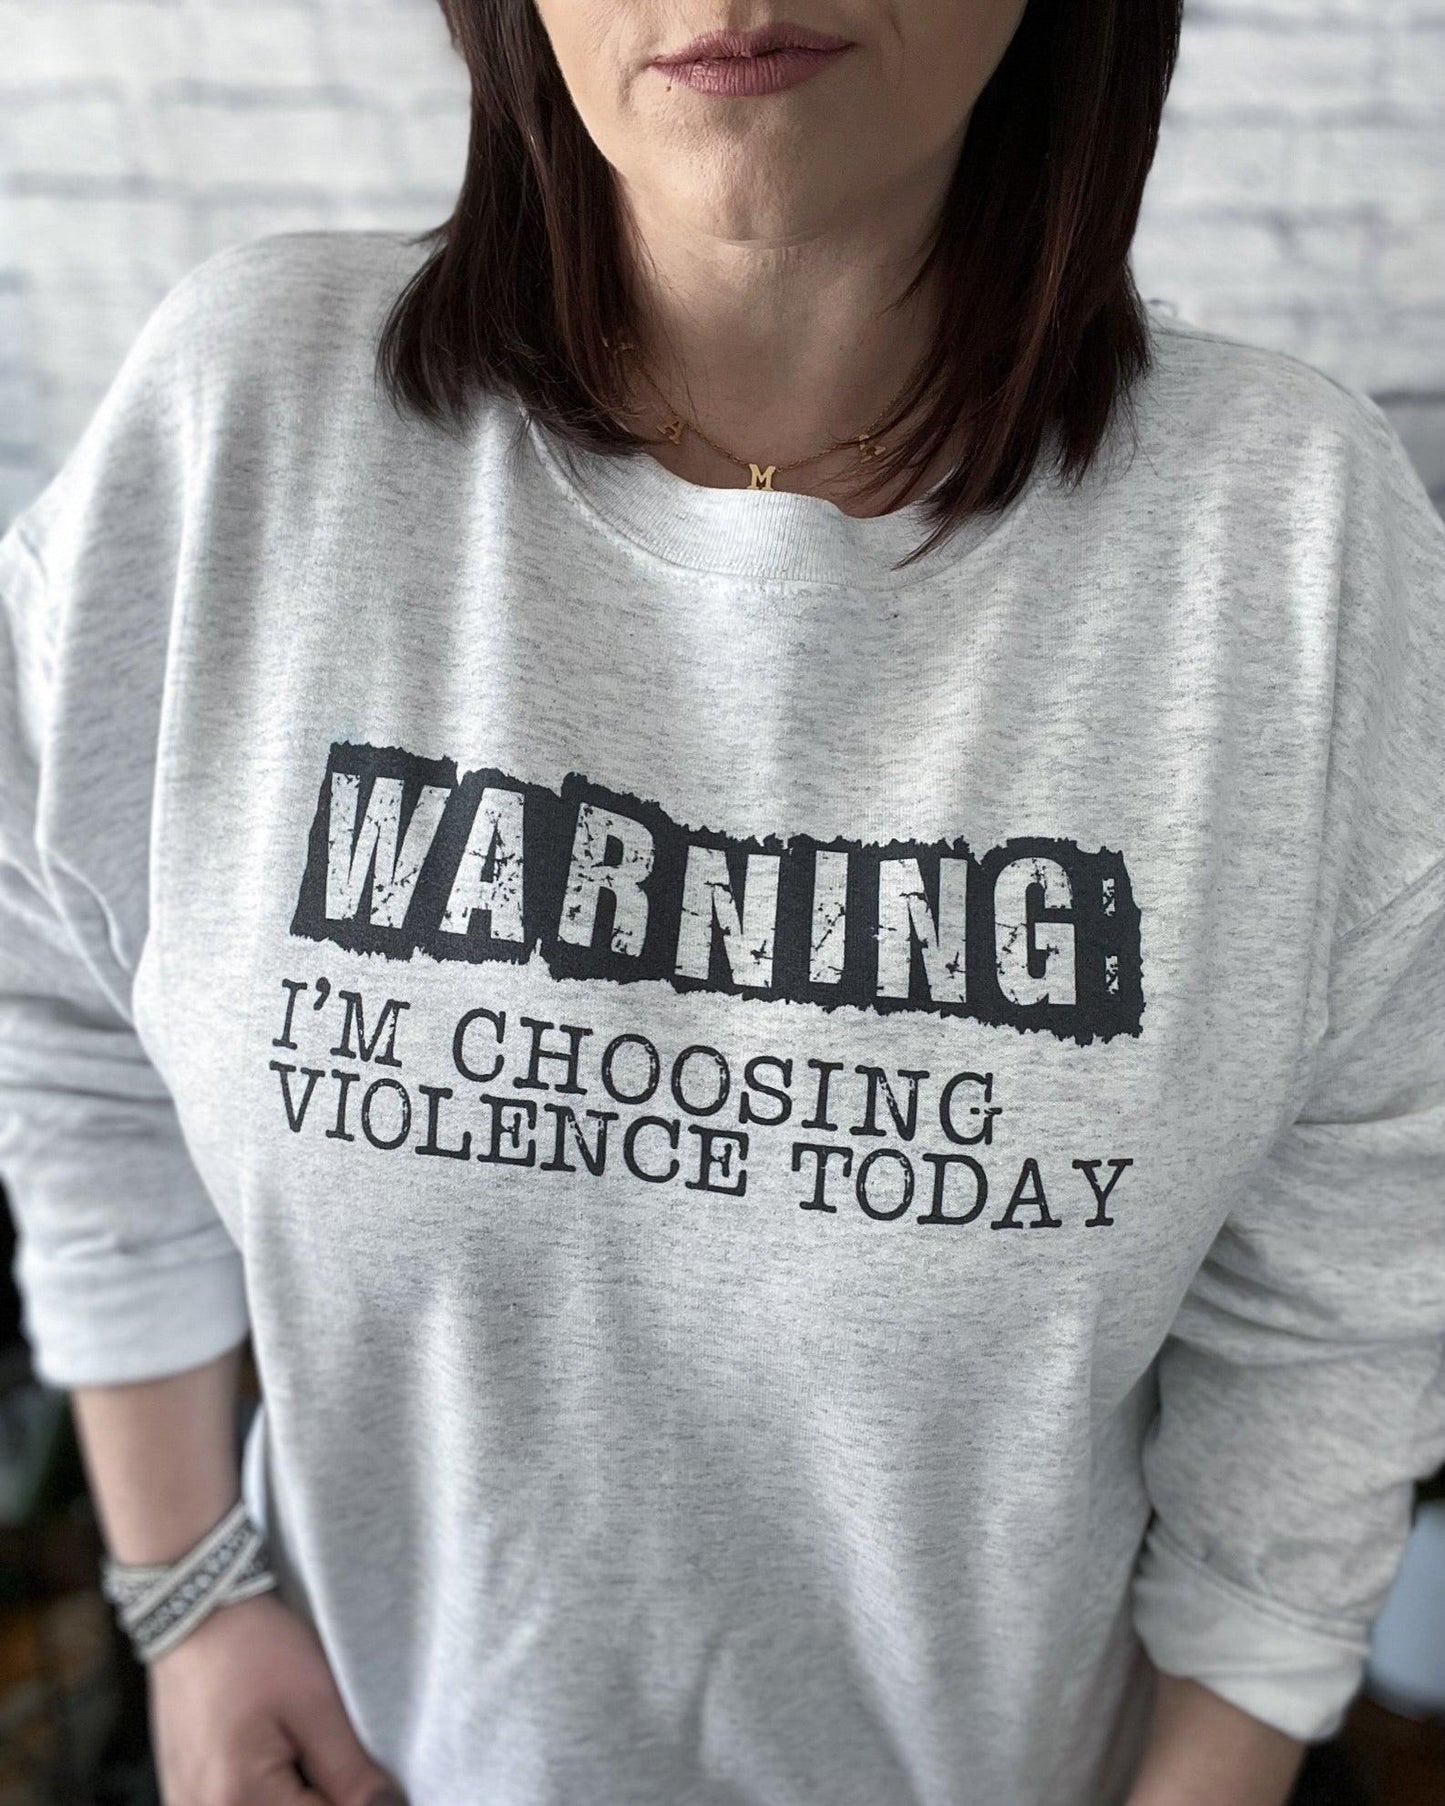 Warning: I'm Choosing Violence Today - Women's shirts -  Rustic Cuts